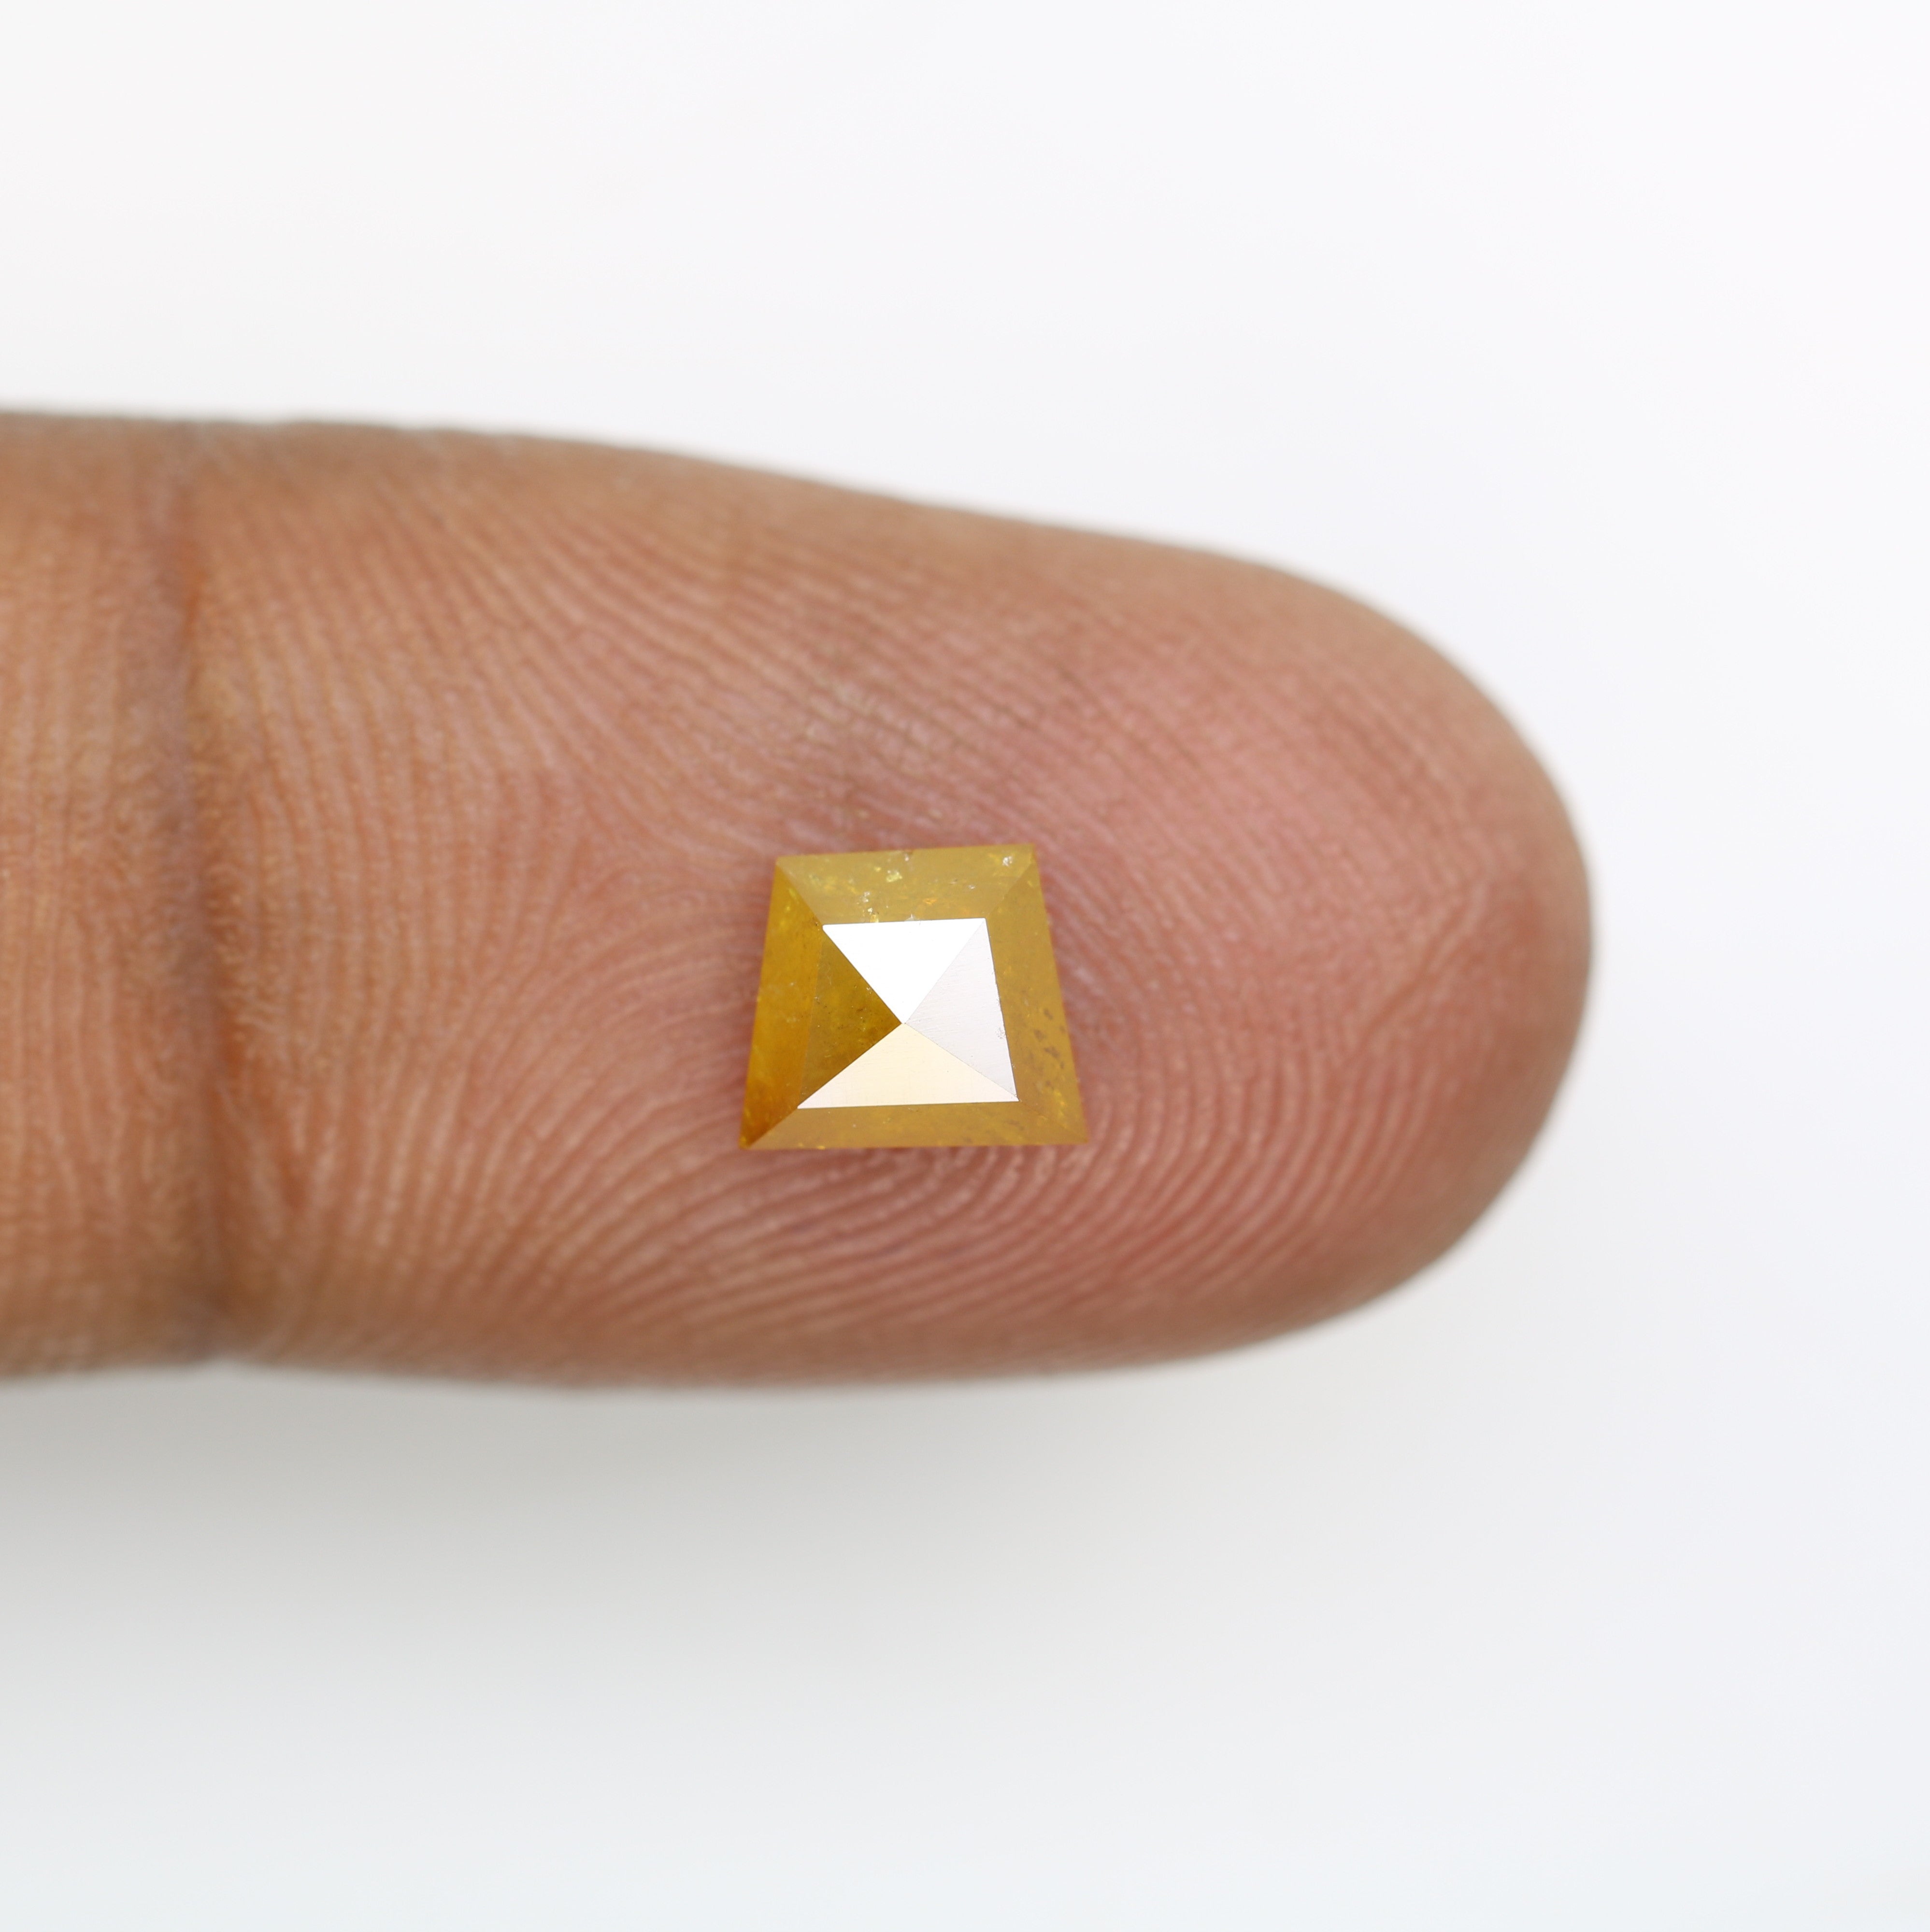 1.16 CT 5.60 MM Polished Geometric Shape Fancy Yellow Diamond For Proposal Ring